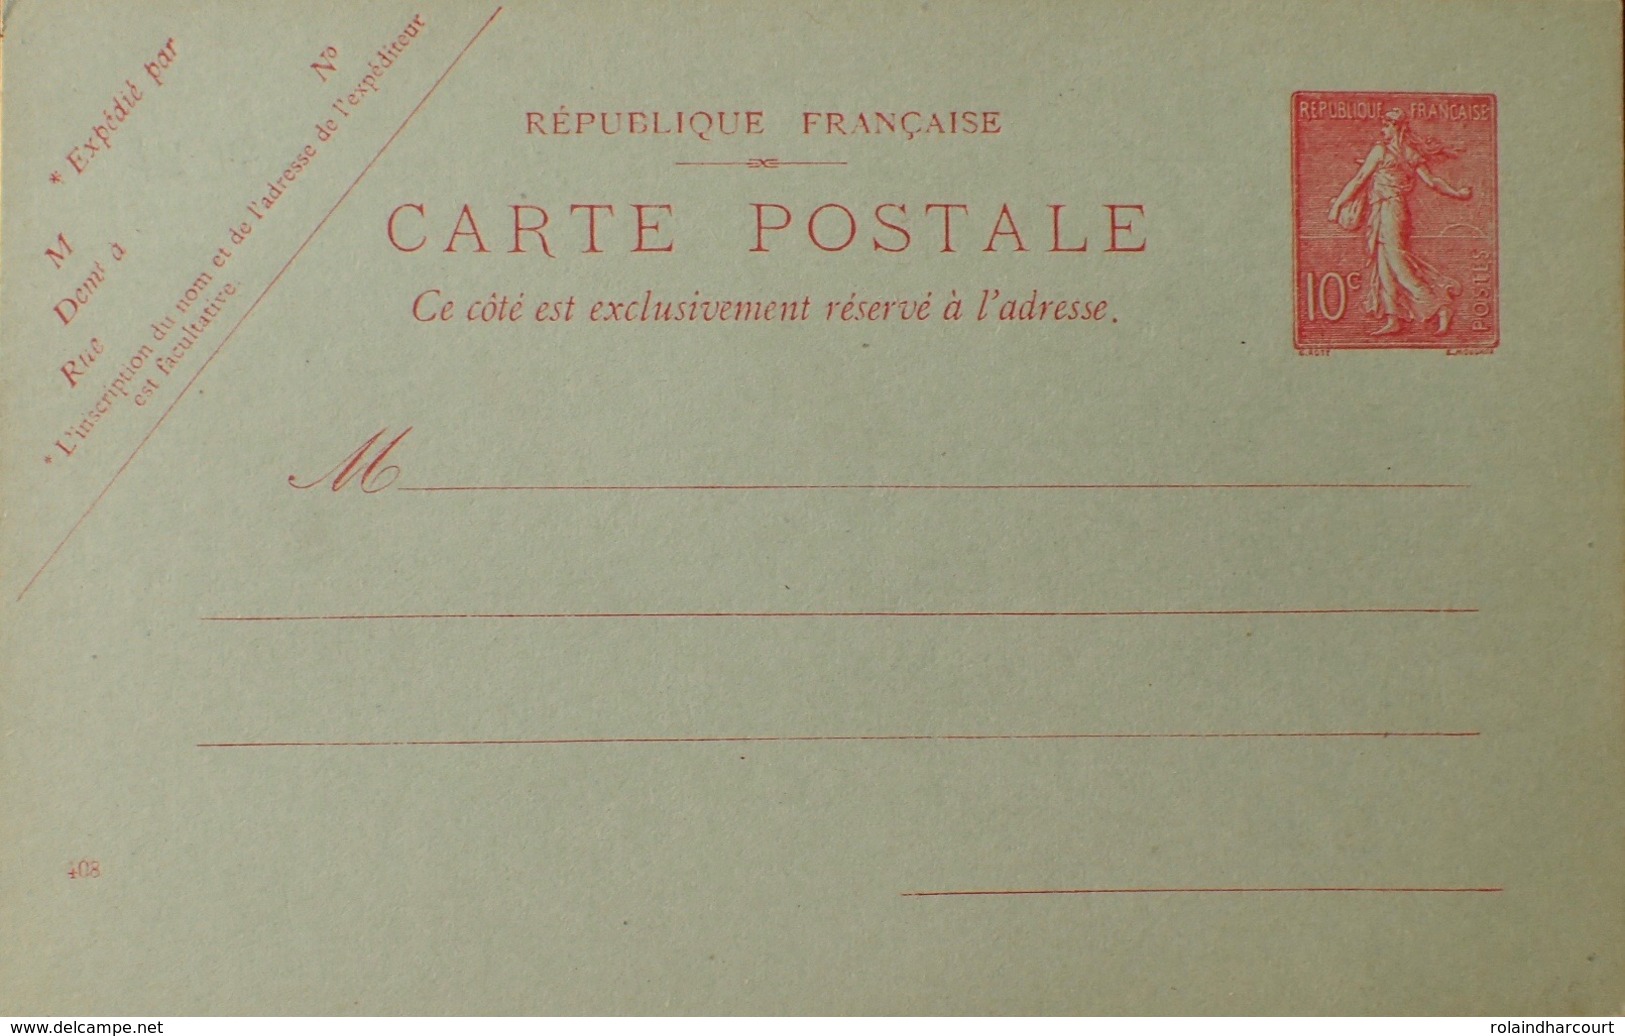 R1189/105 - ENTIER POSTAL - TYPE SEMEUSE LIGNEE - N°129-CP1 (408) - Cartes Postales Repiquages (avant 1995)